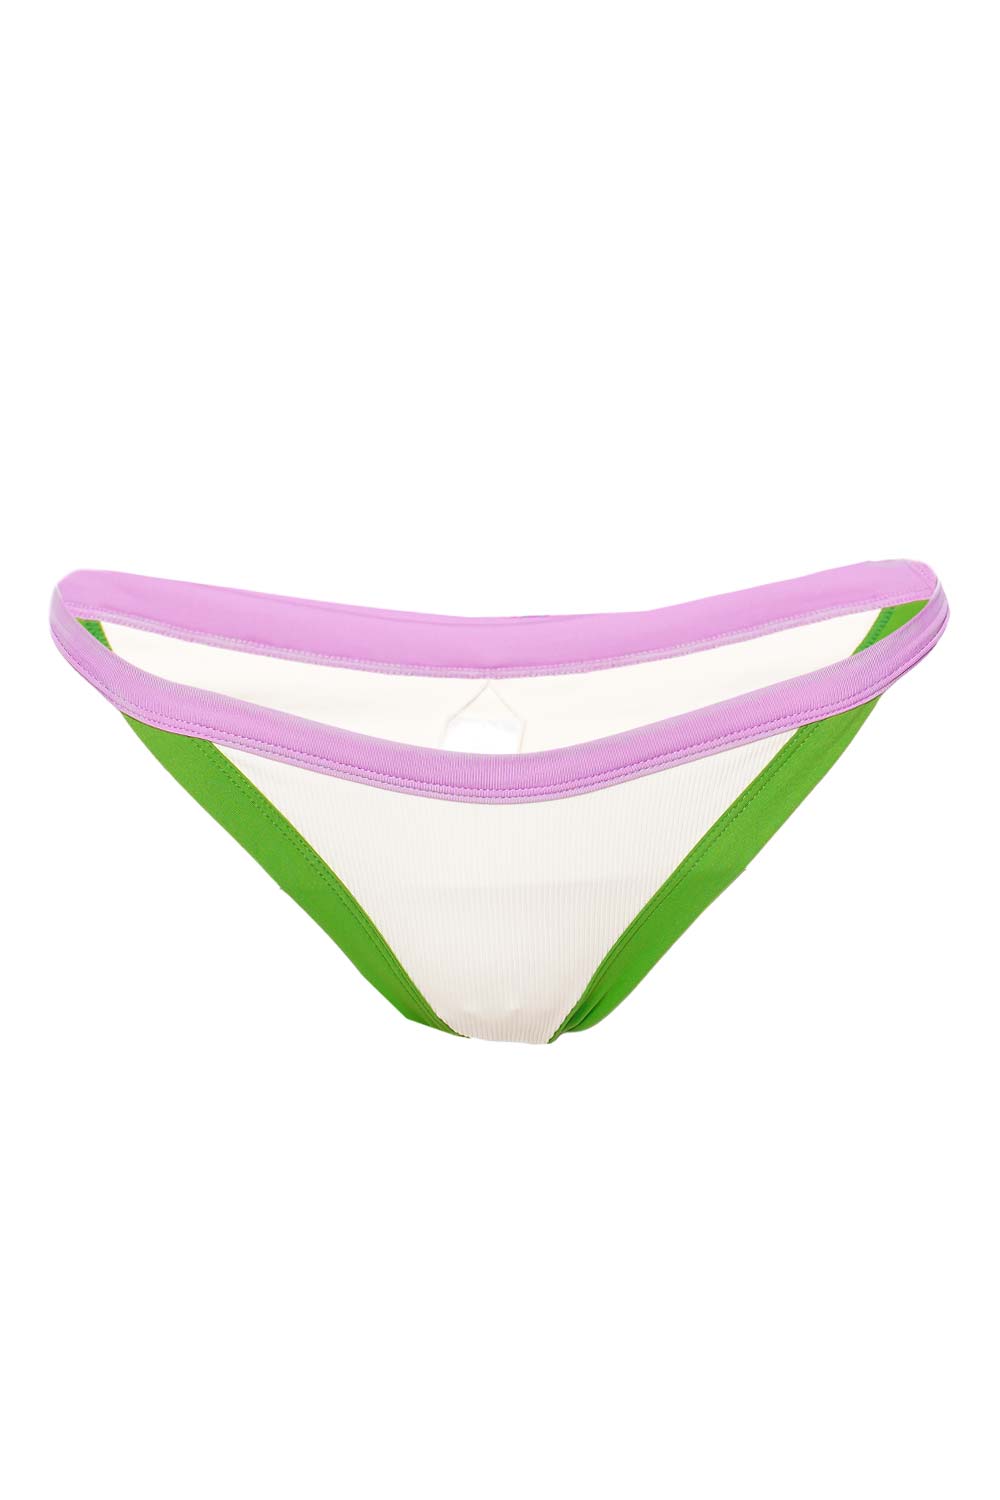 L*Space Vacay Cream Jewel Bikini Bottom